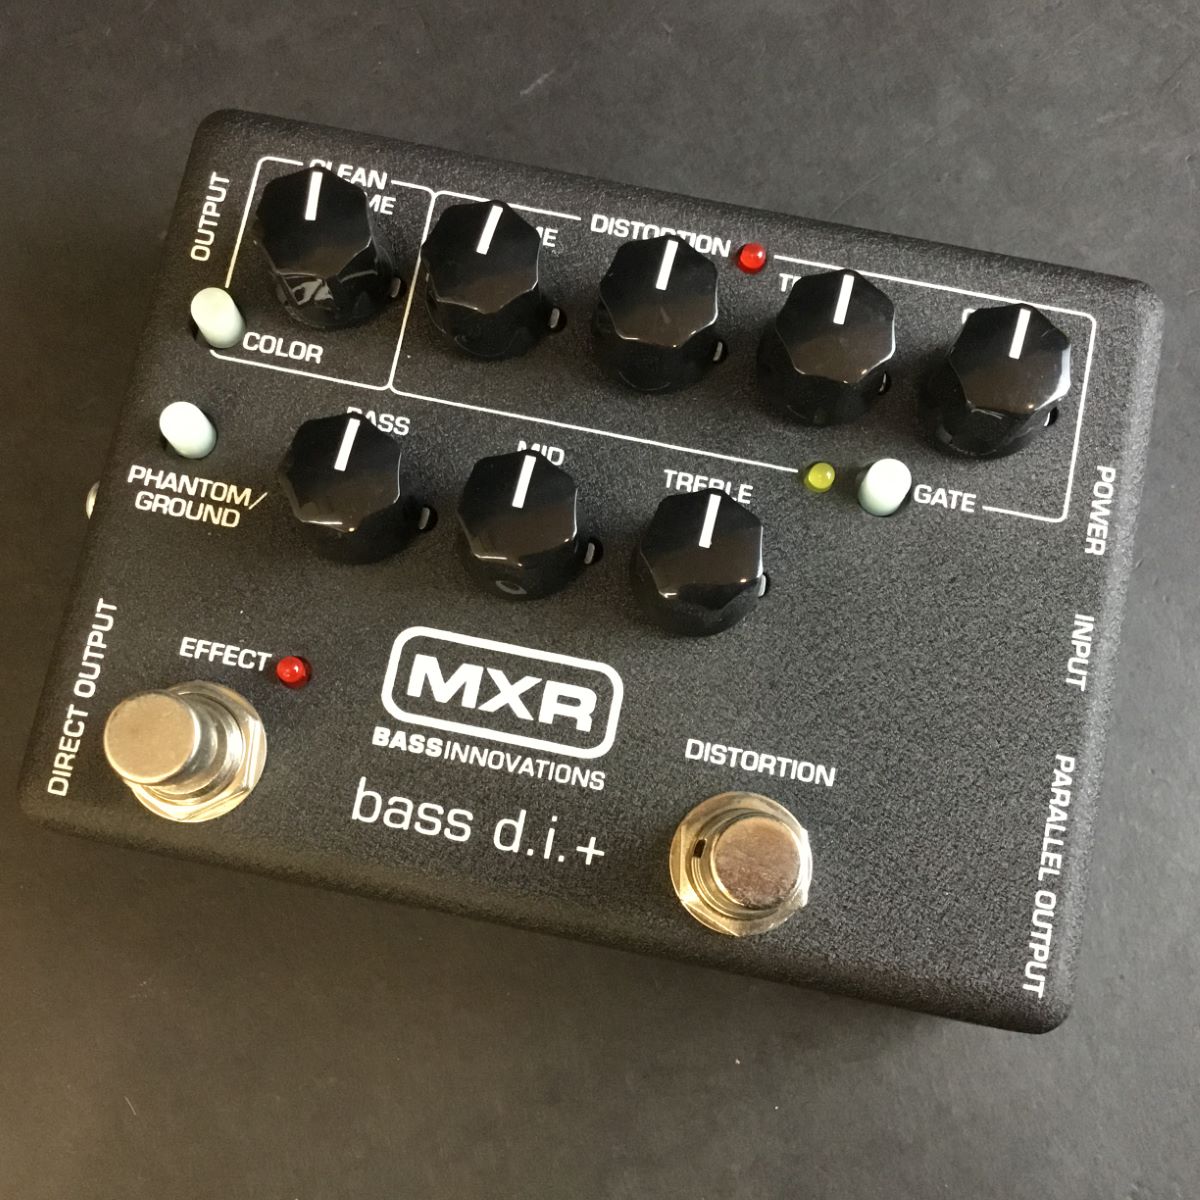 MXR M80 BASS D.I.+ bass preamp ベース プリアンプ2年前購入2ヶ月使用 